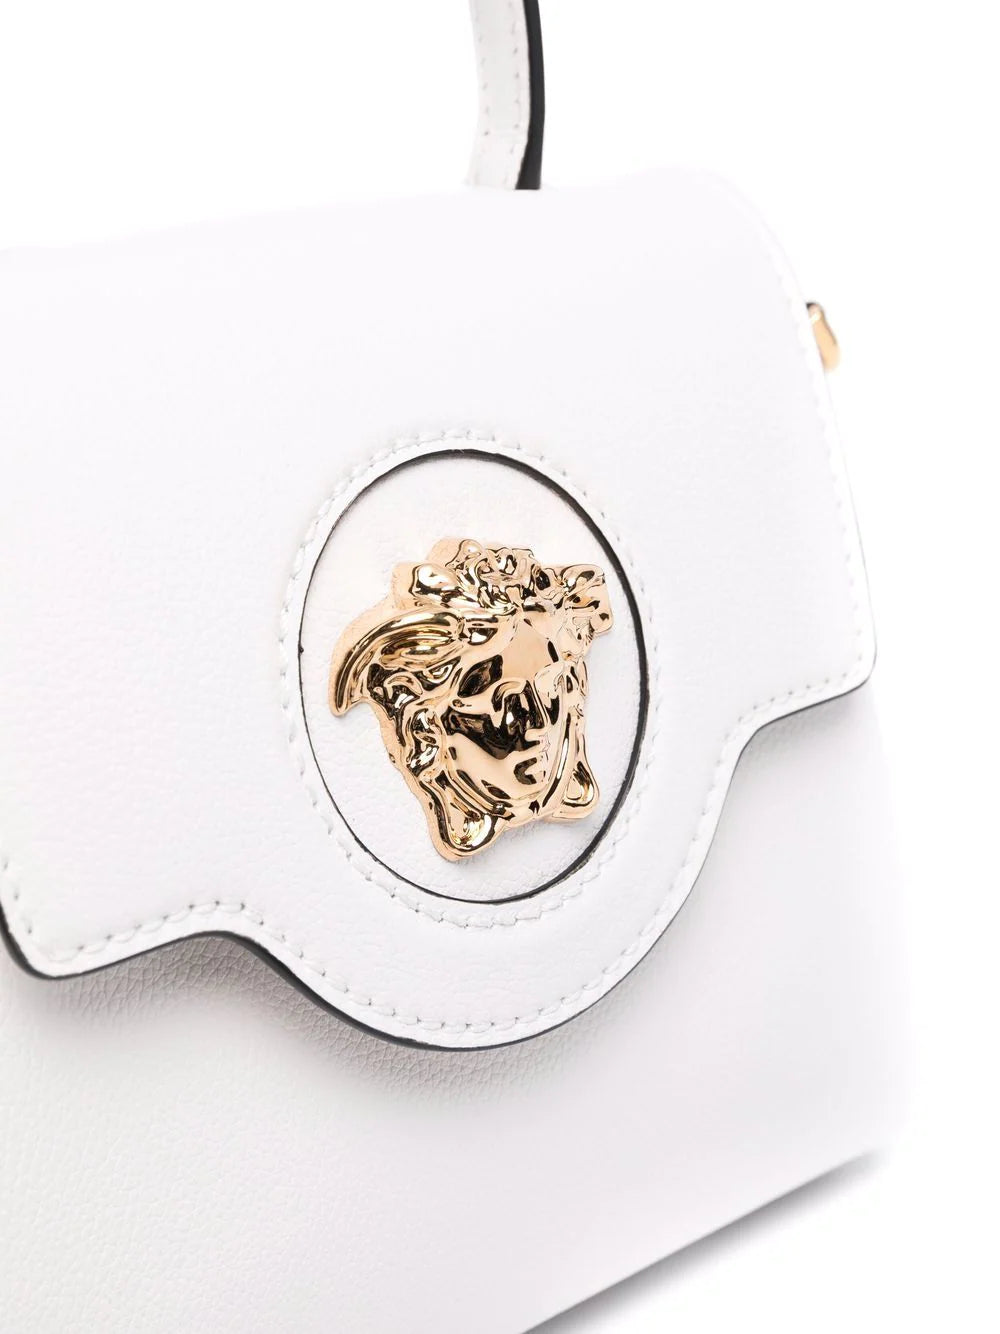 Versace White La Medusa Leather Small Handbag